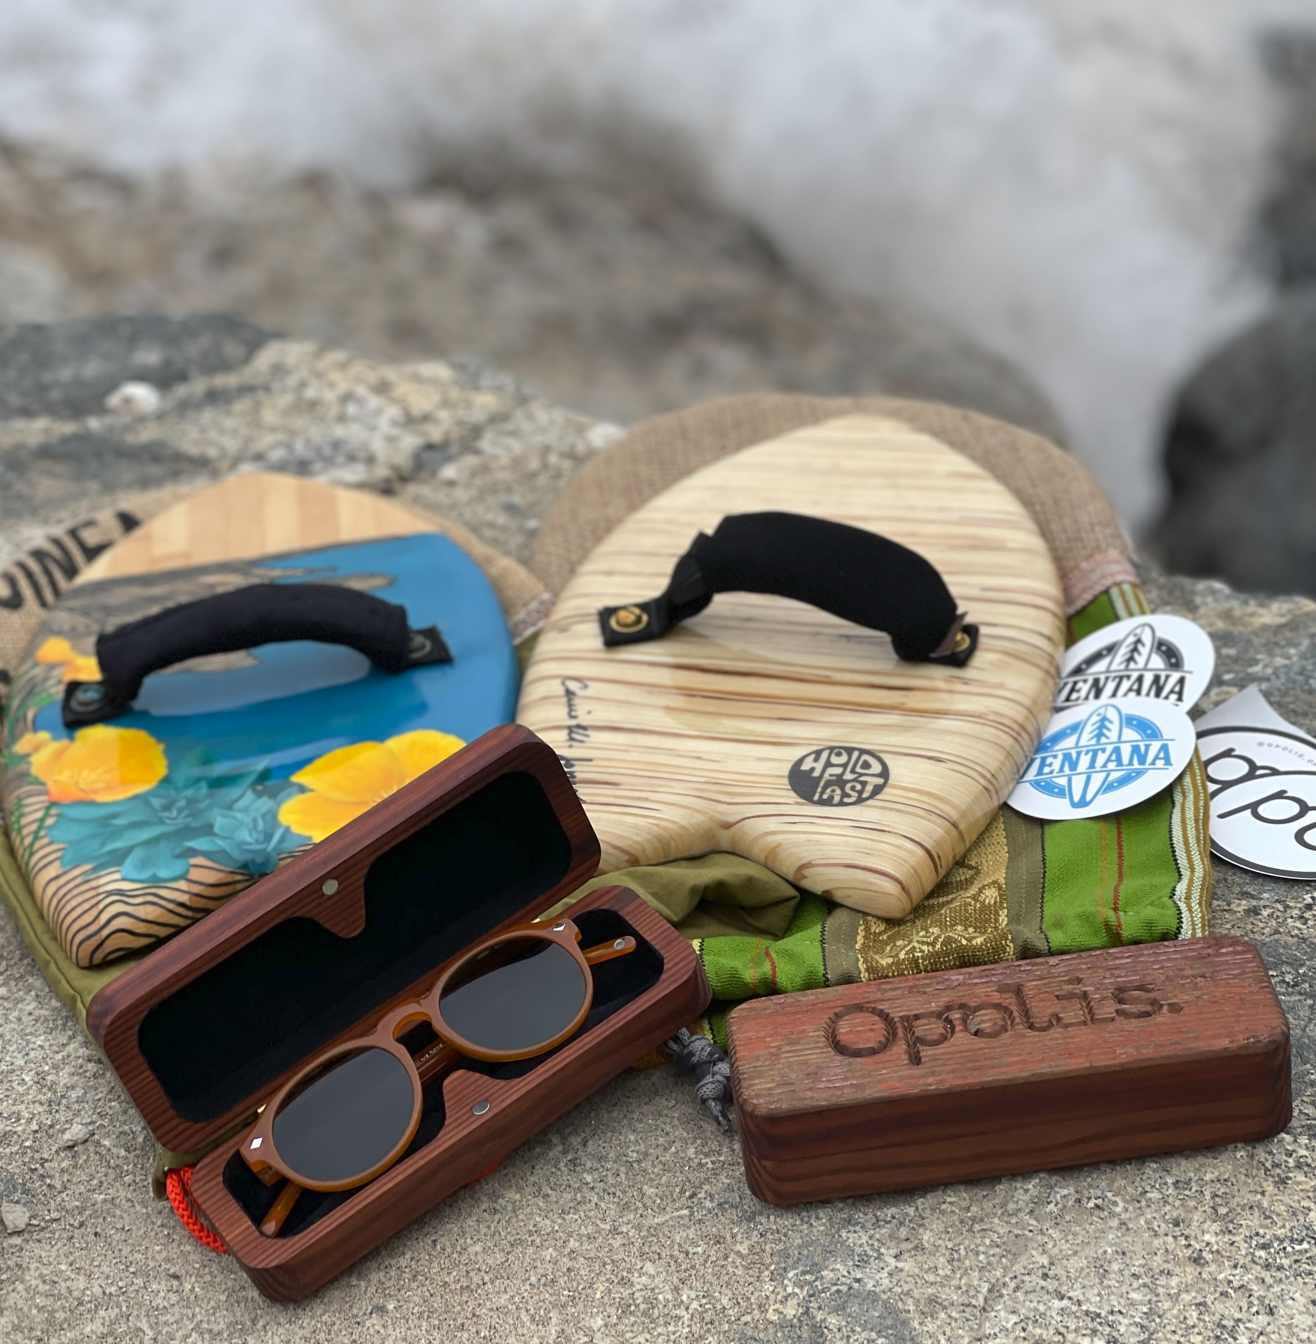 Ventana Bodysurfing Handplanes and Opolis Optics Sunglasses